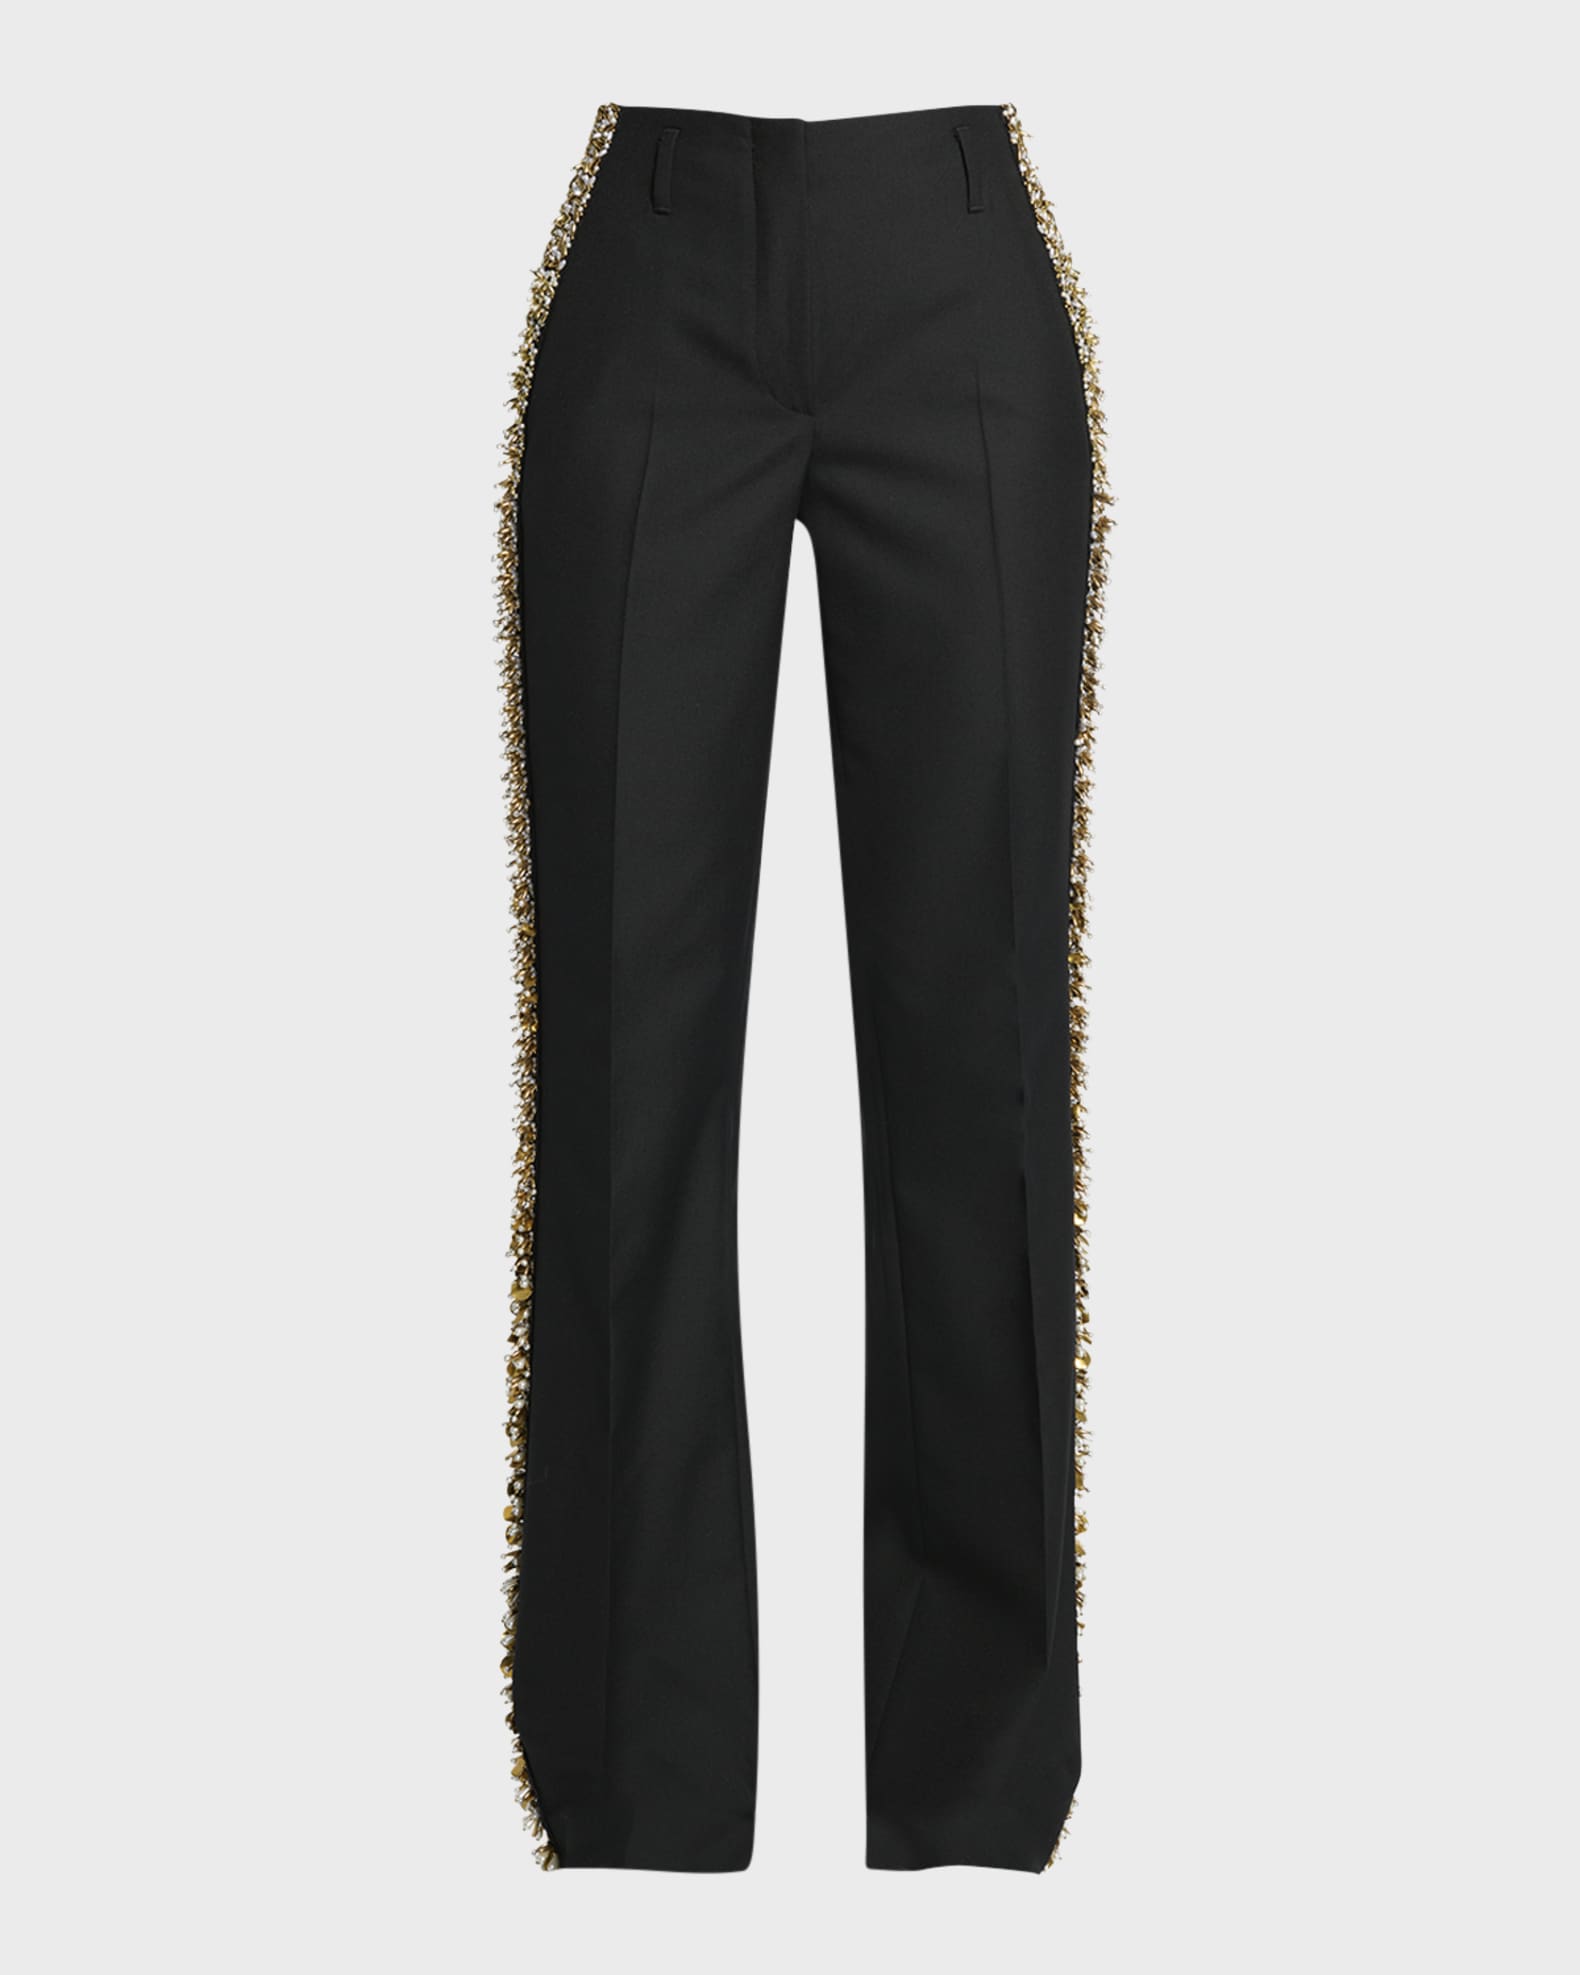 Dries Van Noten Parchia Embellished Trousers | Neiman Marcus